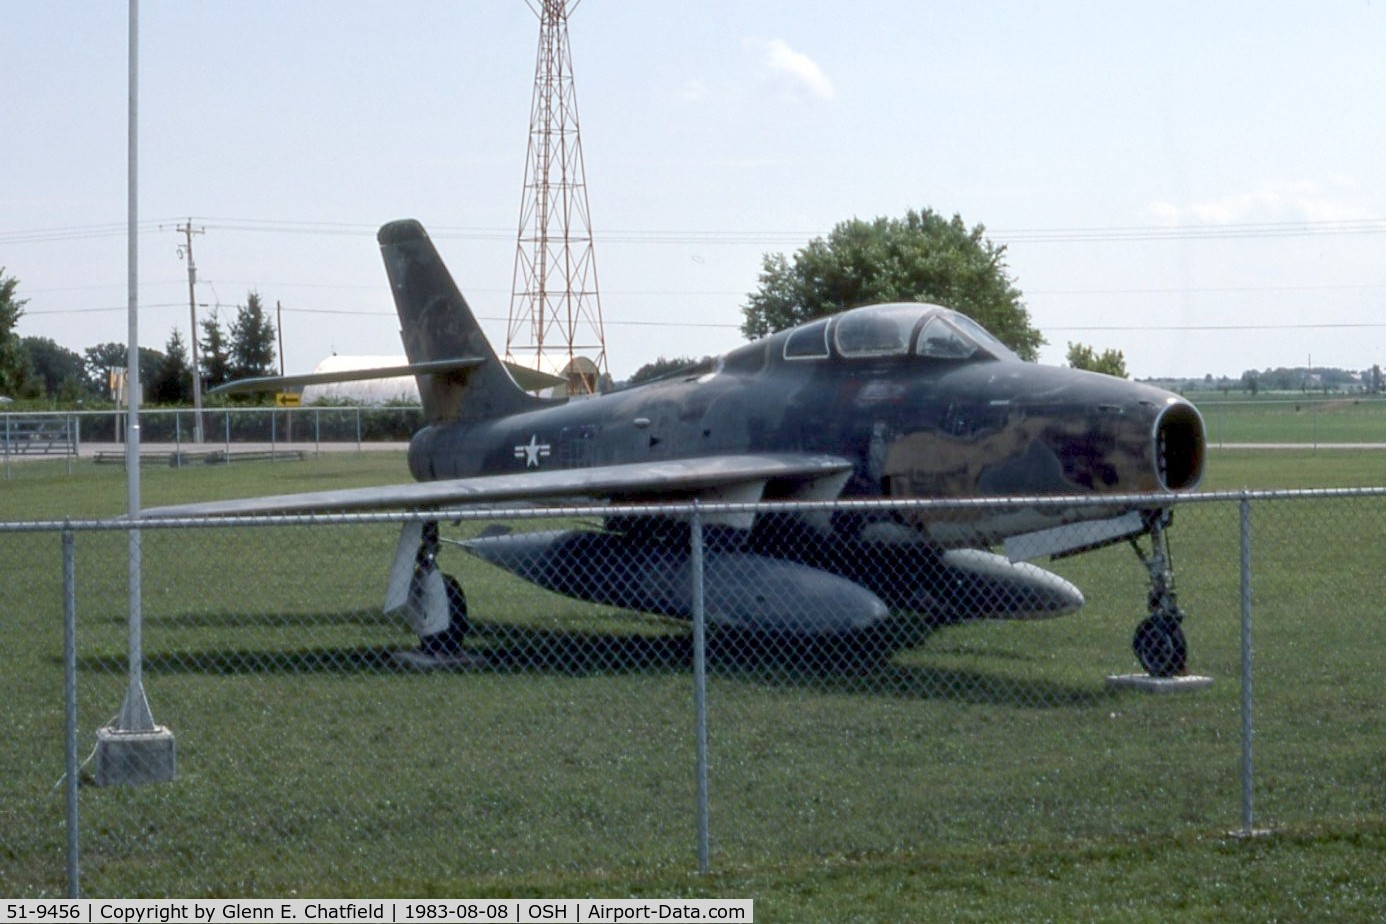 51-9456, 1951 General Motors F-84F-35-GK Thunderstreak C/N Not found 51-9456, F-84F at the EAA Museum.